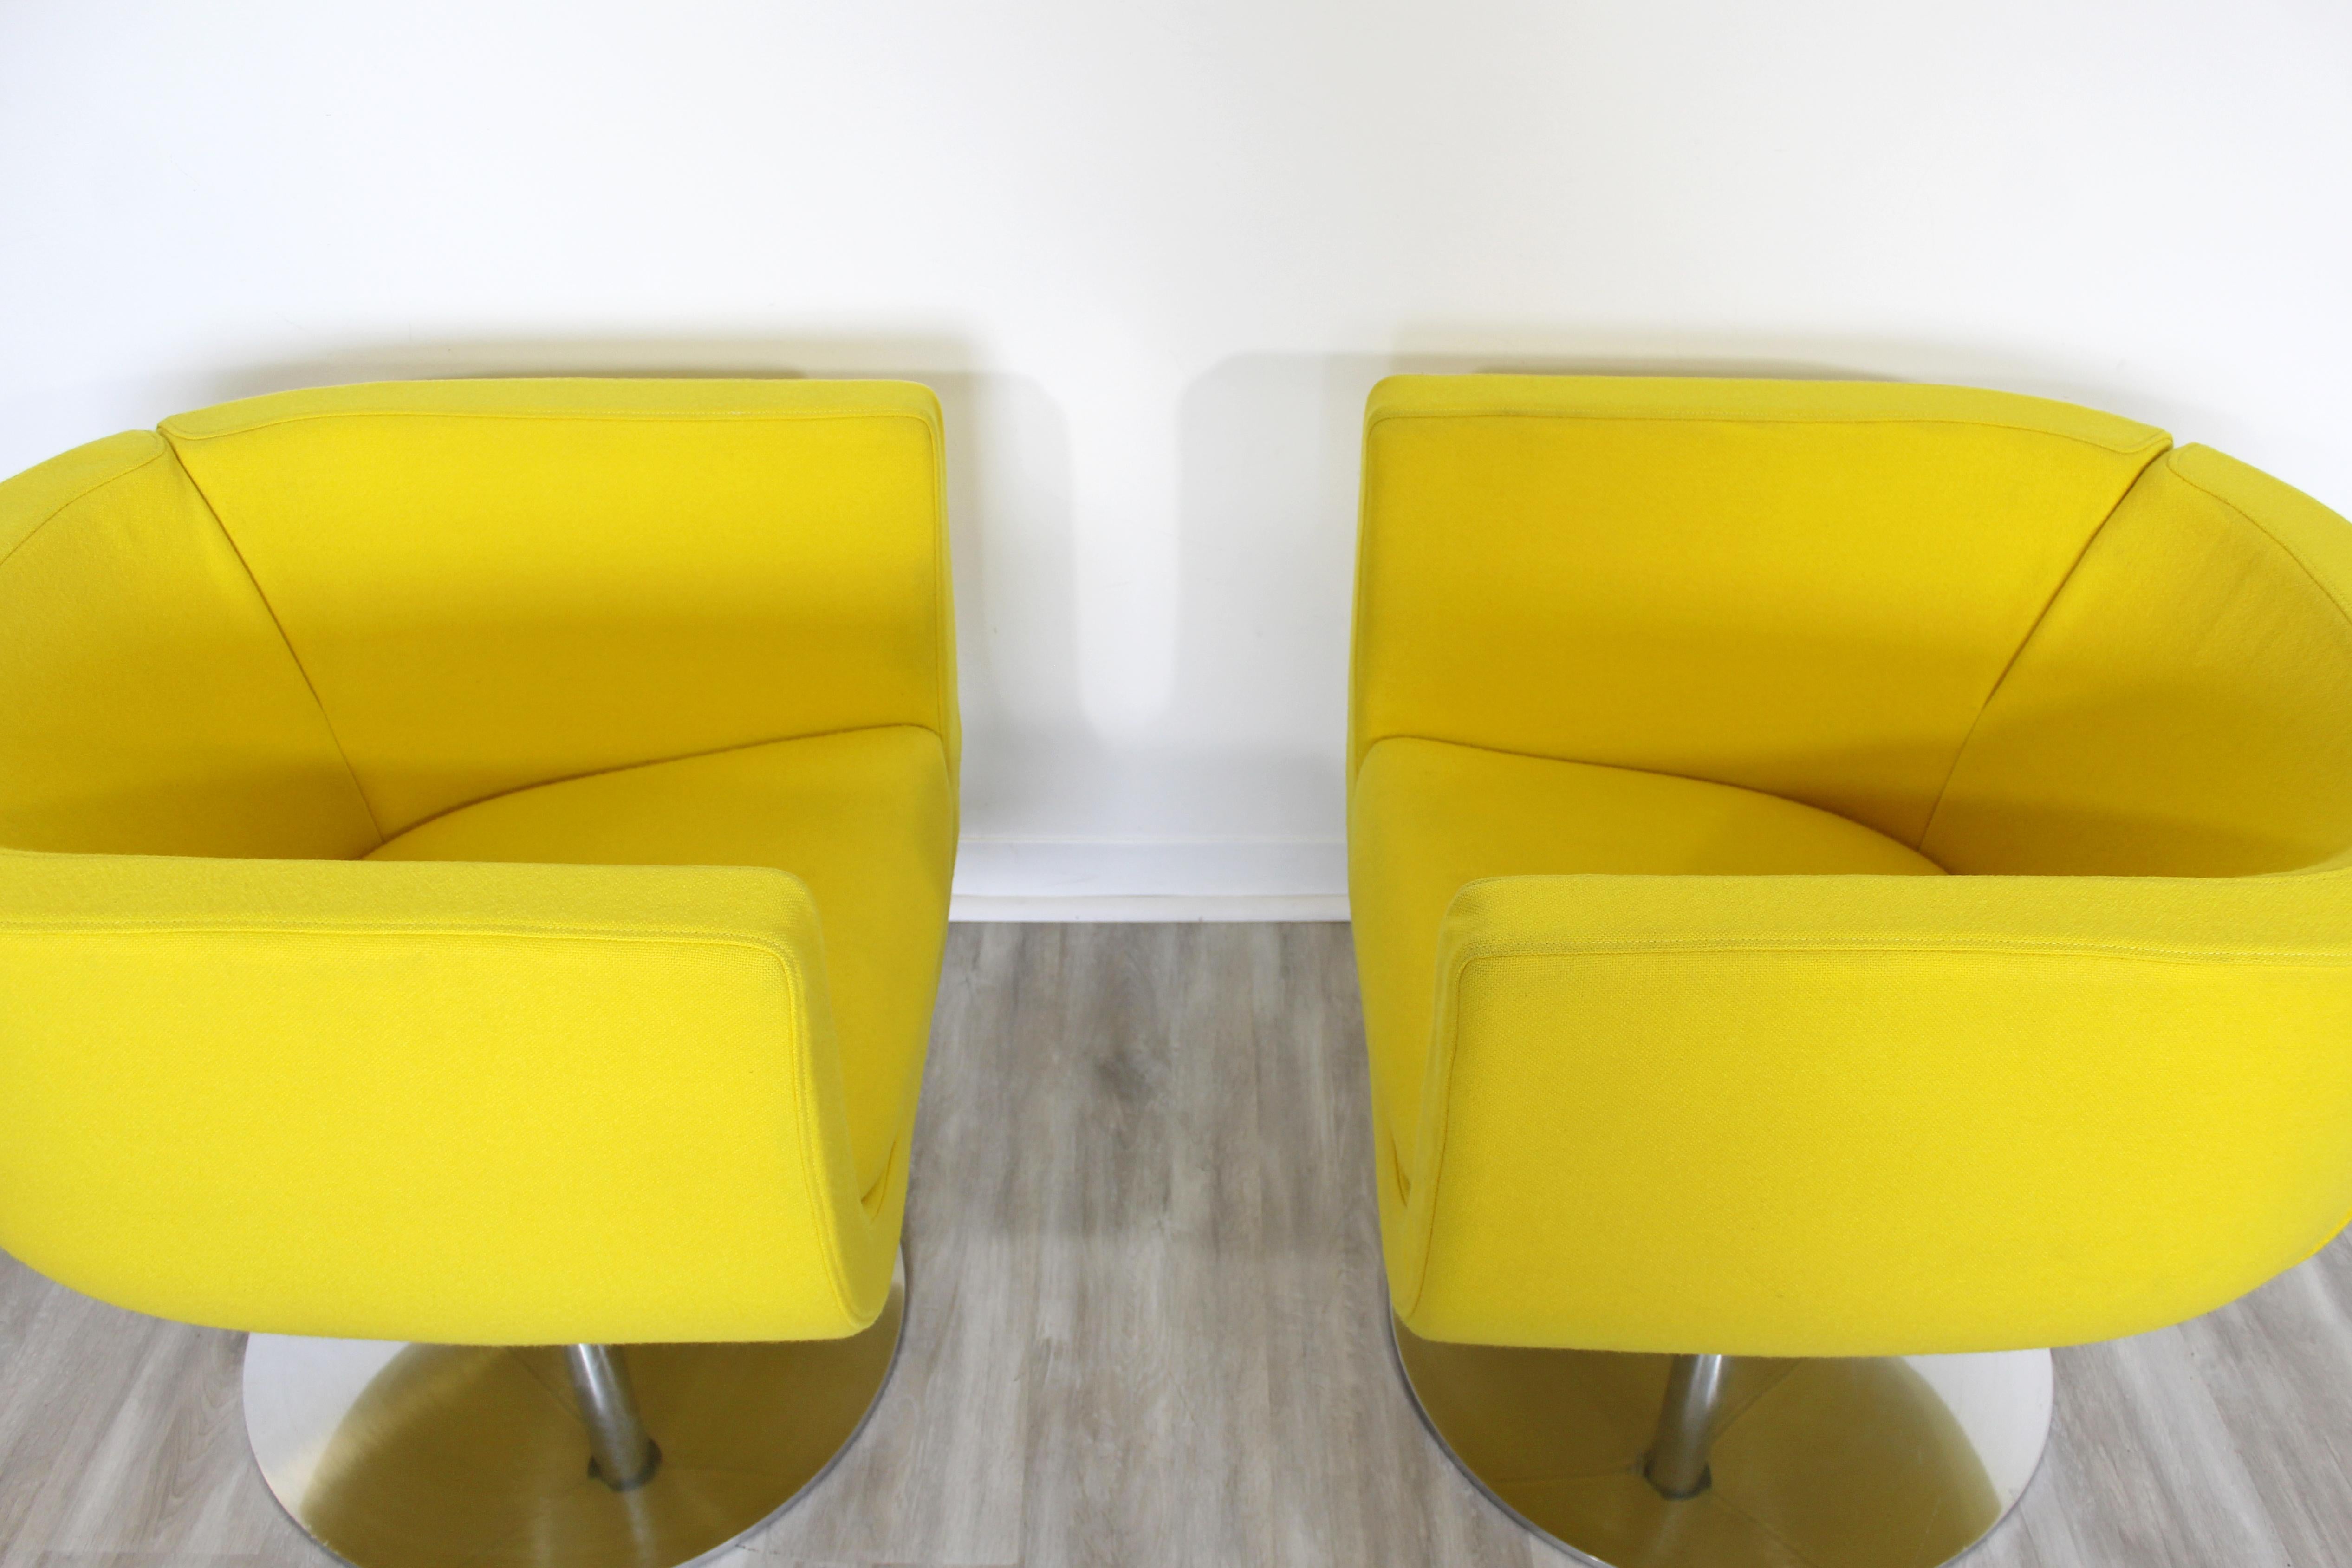 Late 20th Century Contemporary Modern Pair of Yellow Tulip Chrome Swivel Chairs B&B Italia